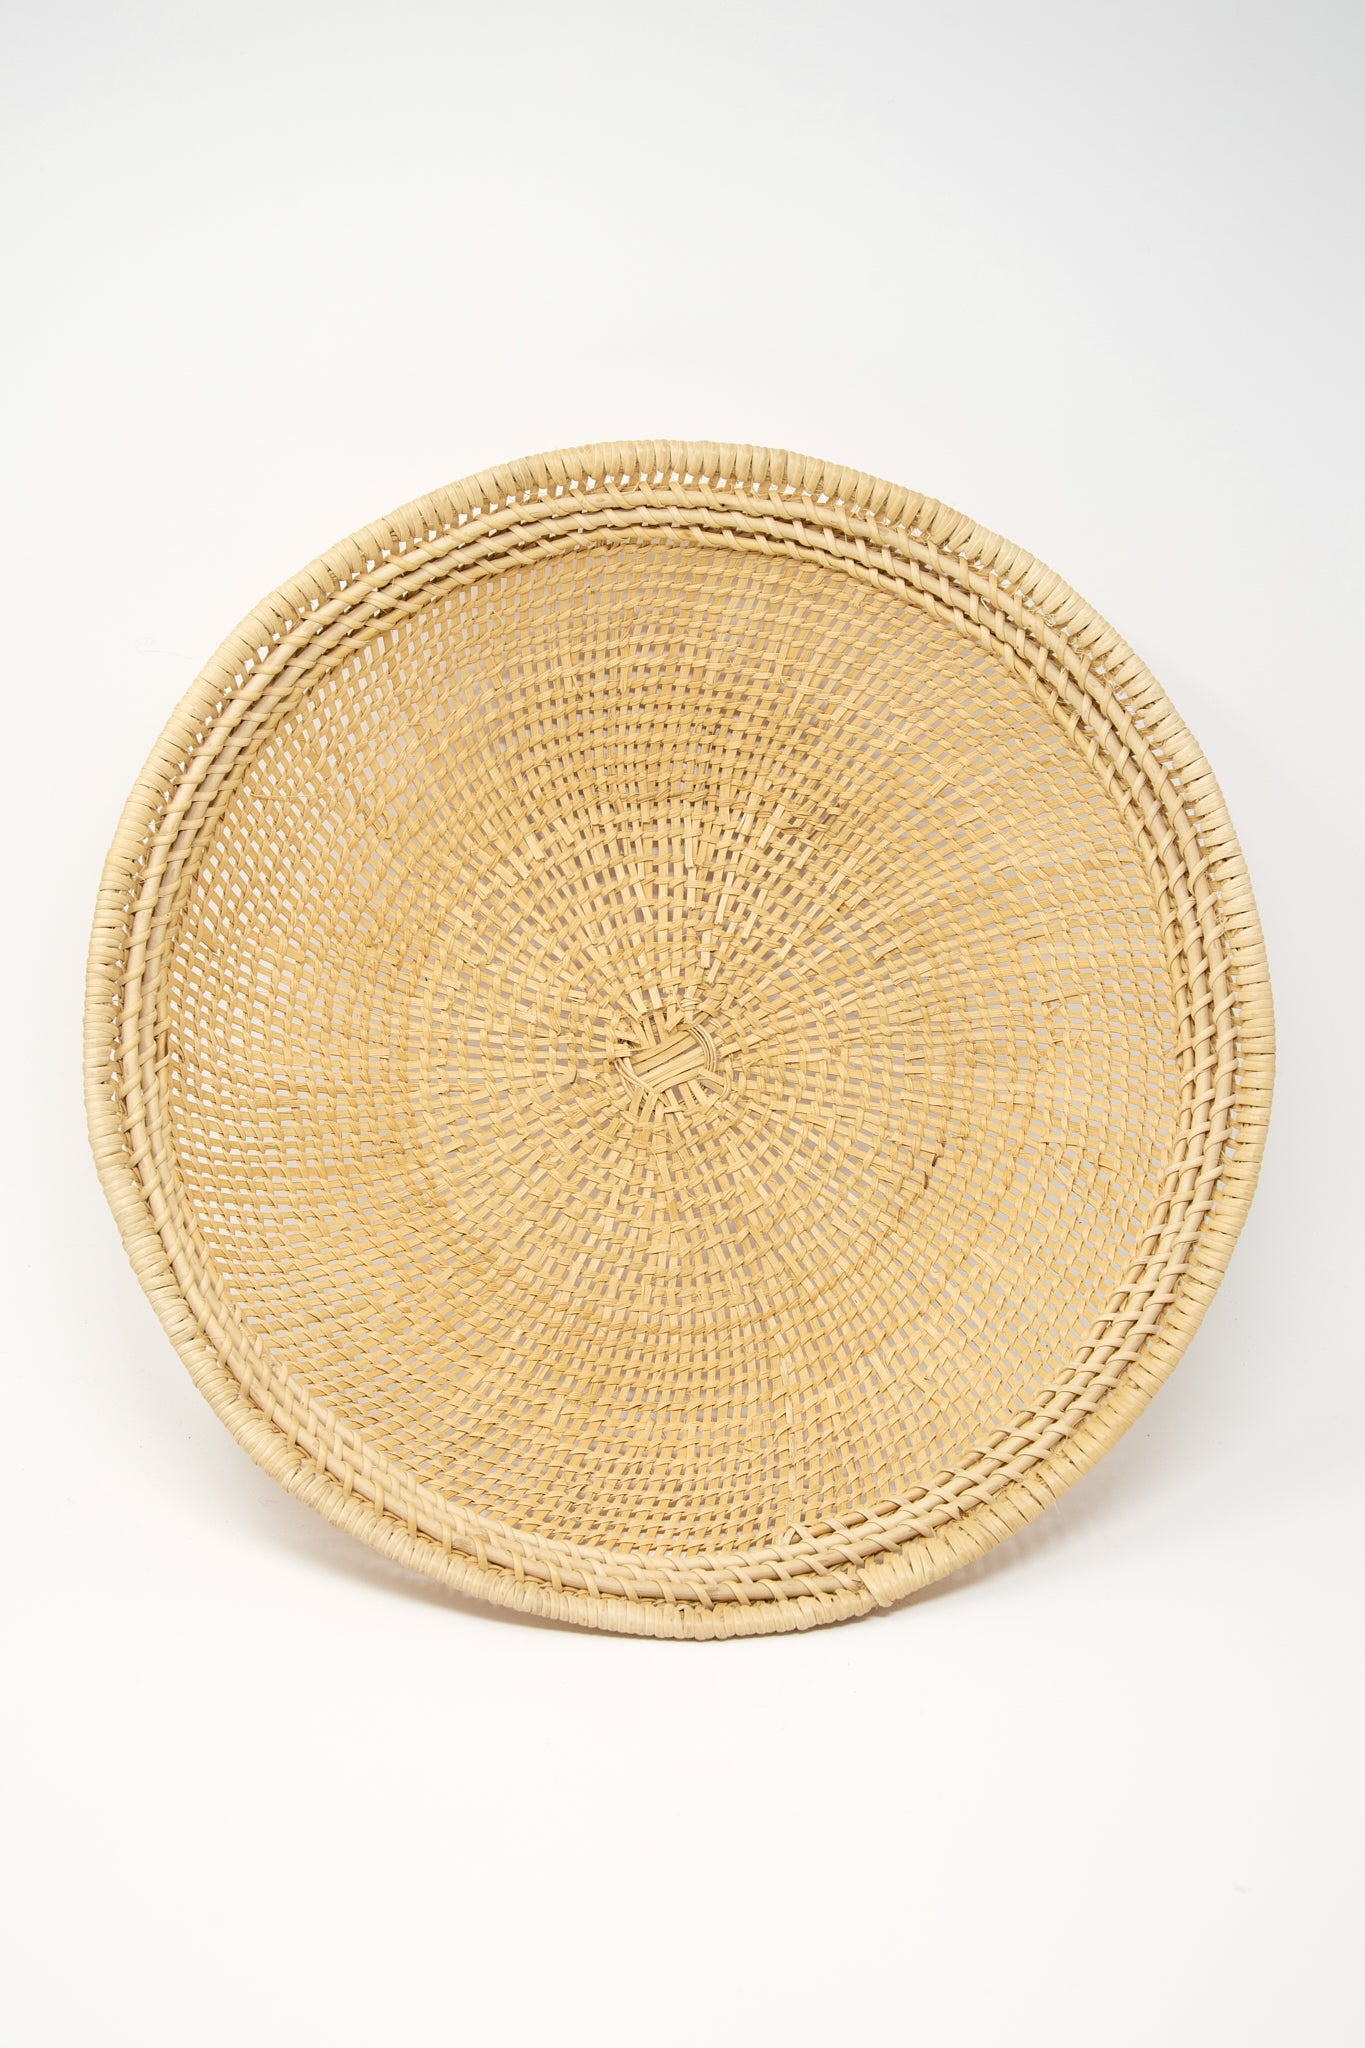 An artisan-crafted Large Avia Pova Basket by Plaza Bolivar on a white background.